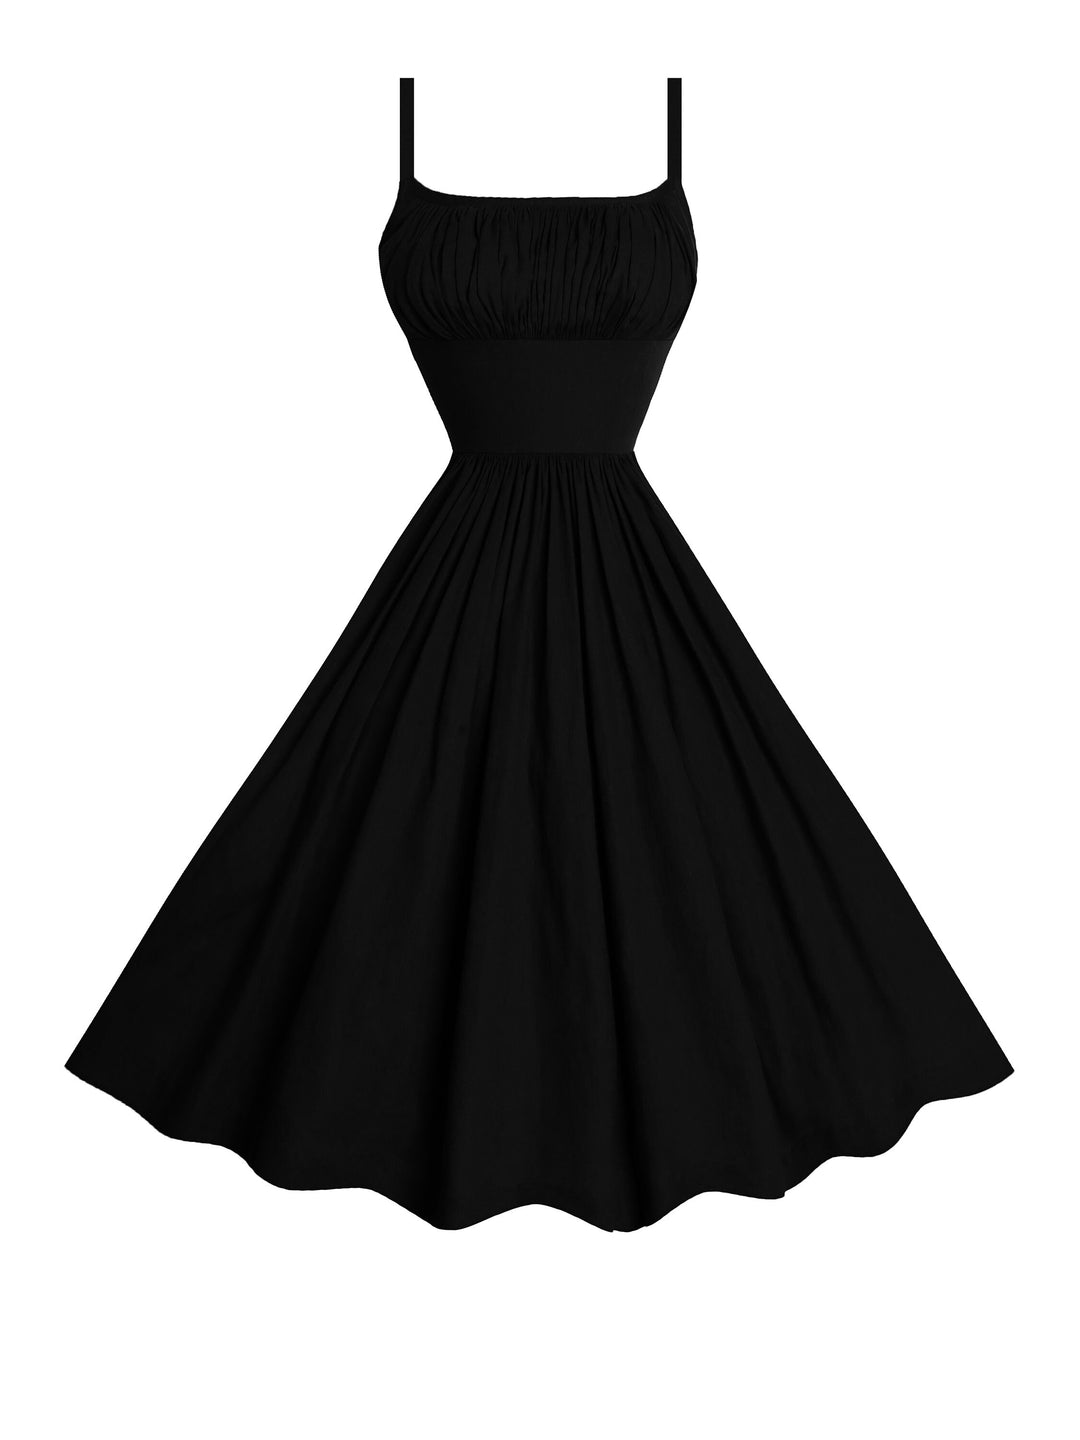 MTO - Grace Dress in Midnight Black Linen